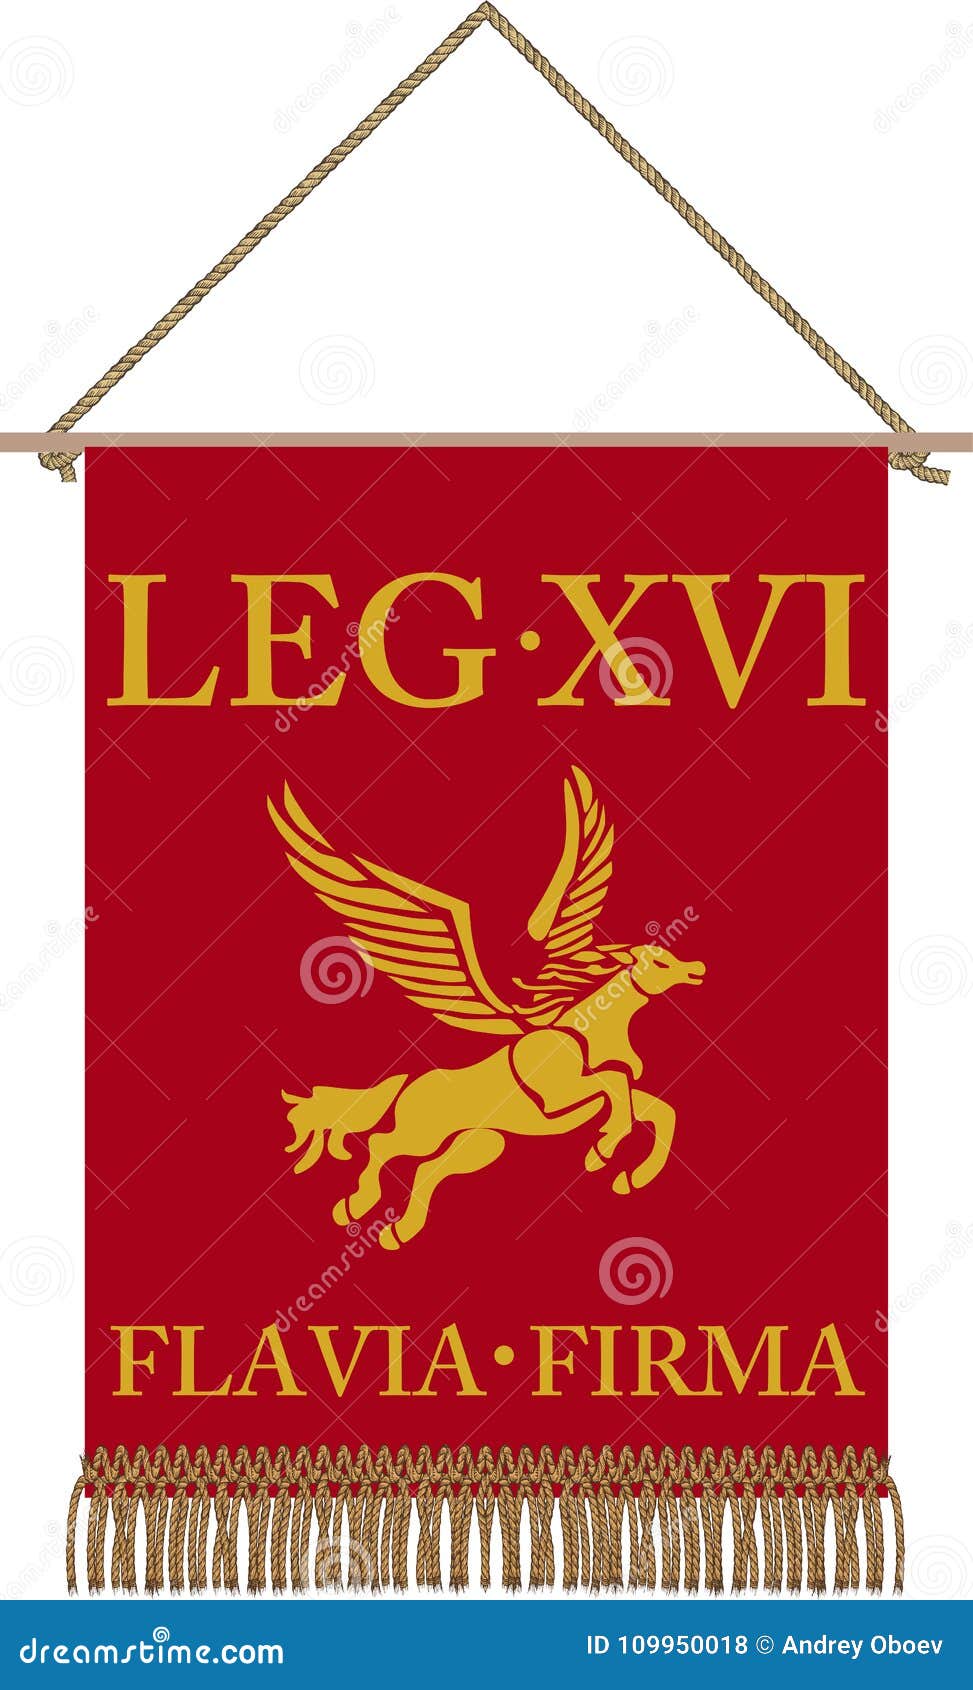  standard of legio xvi flavia firma on white background